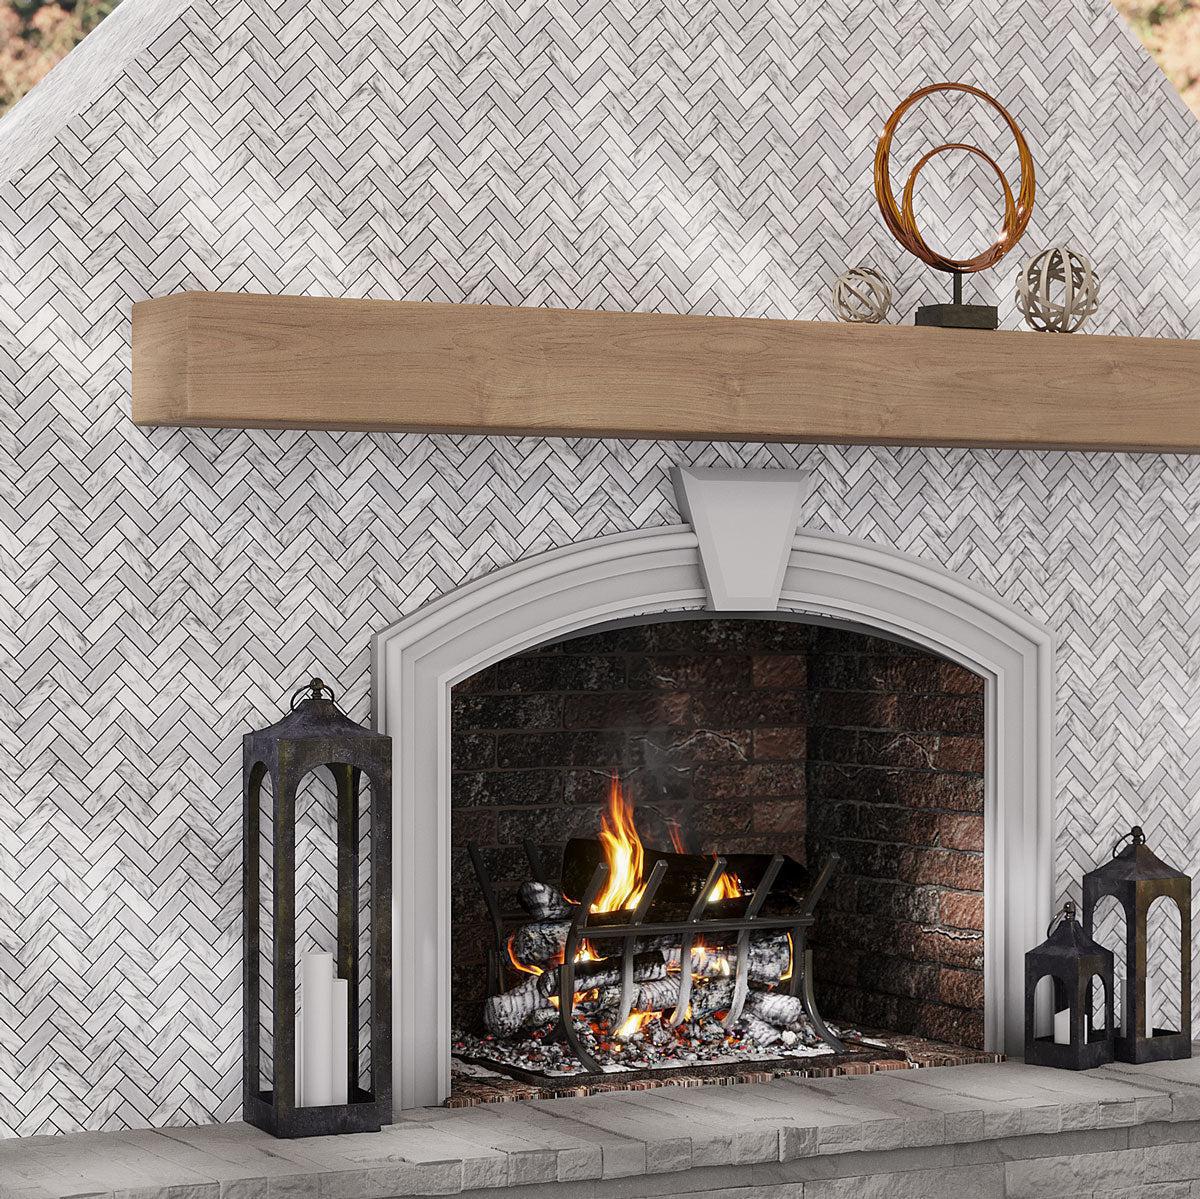 Outdoor fireplace with Carrara marble herringbone tiles